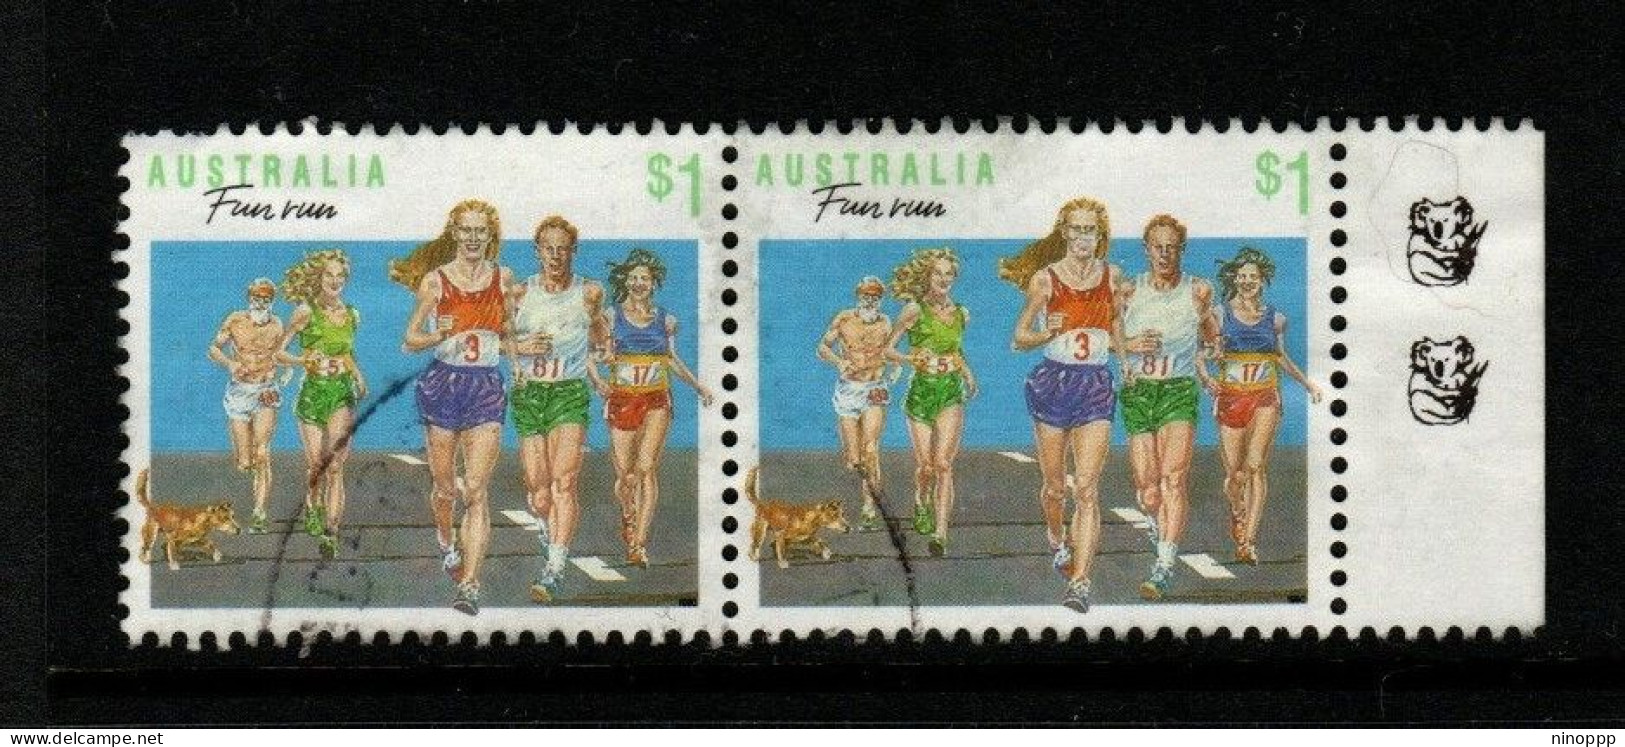 Australia ASC 1231c 1991 Sports $ 1 Fun Run  Reprint 2 Koala,used - Proofs & Reprints